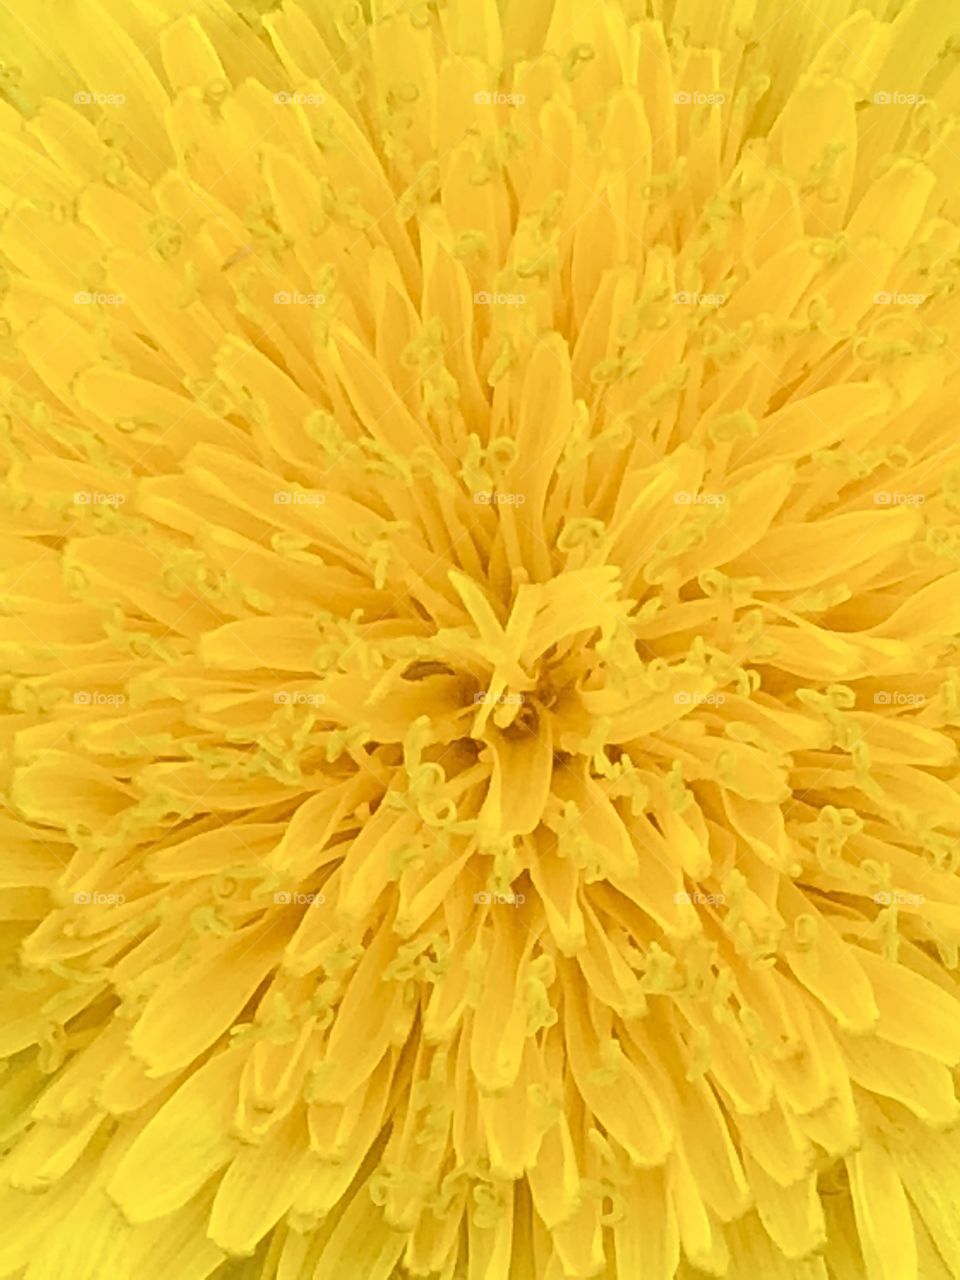 Dandilion weed yellow flower